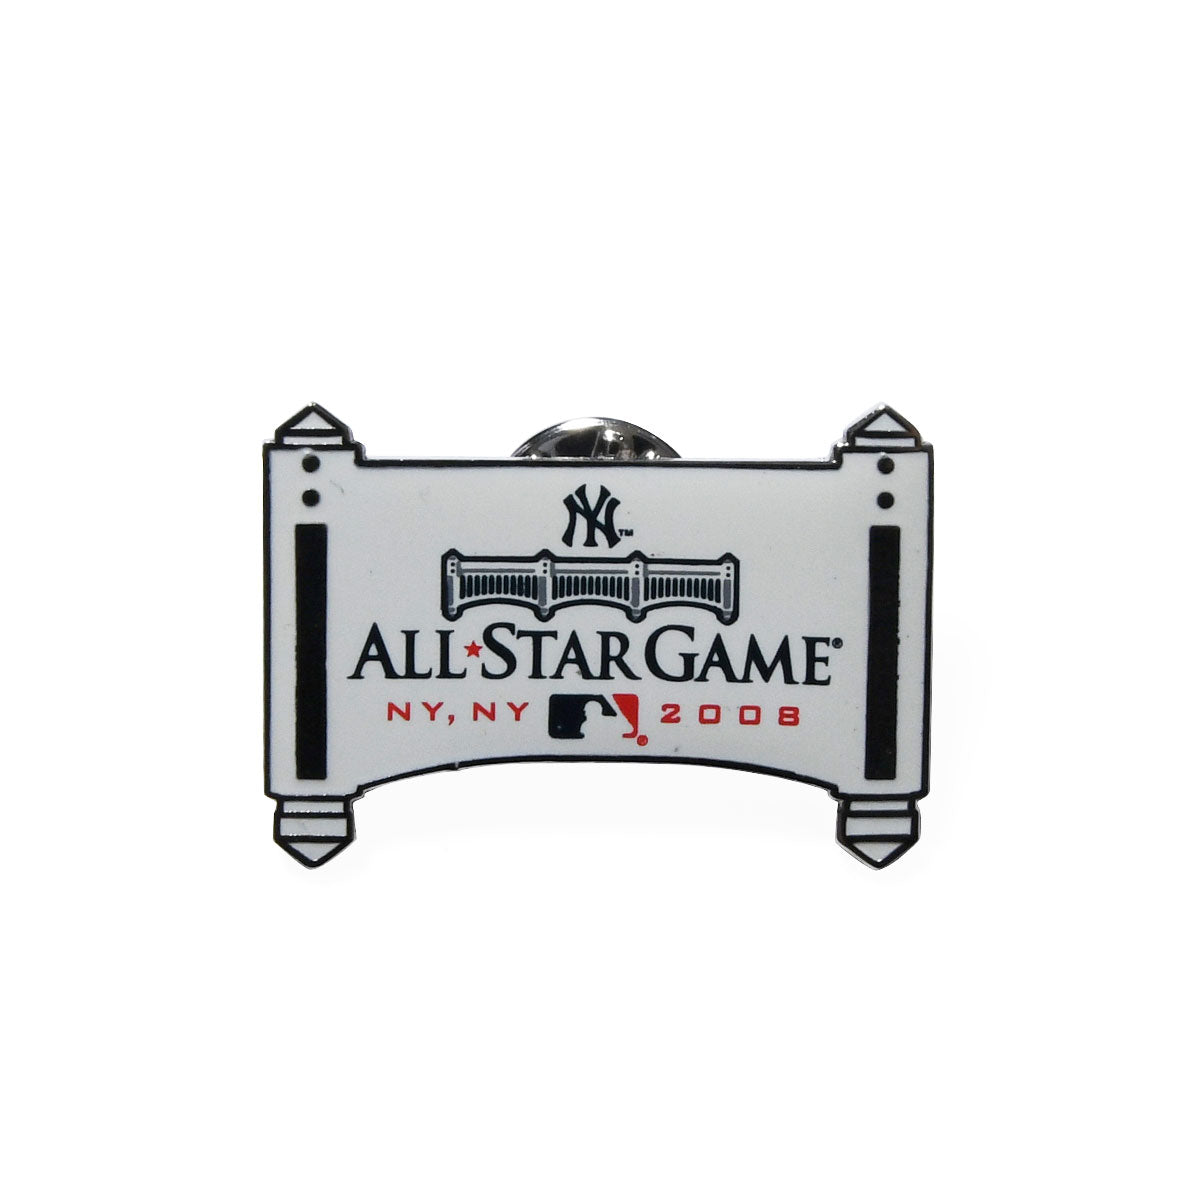 MLB-2345 2008 MLB All-Star Game Home Plate Facade Pin